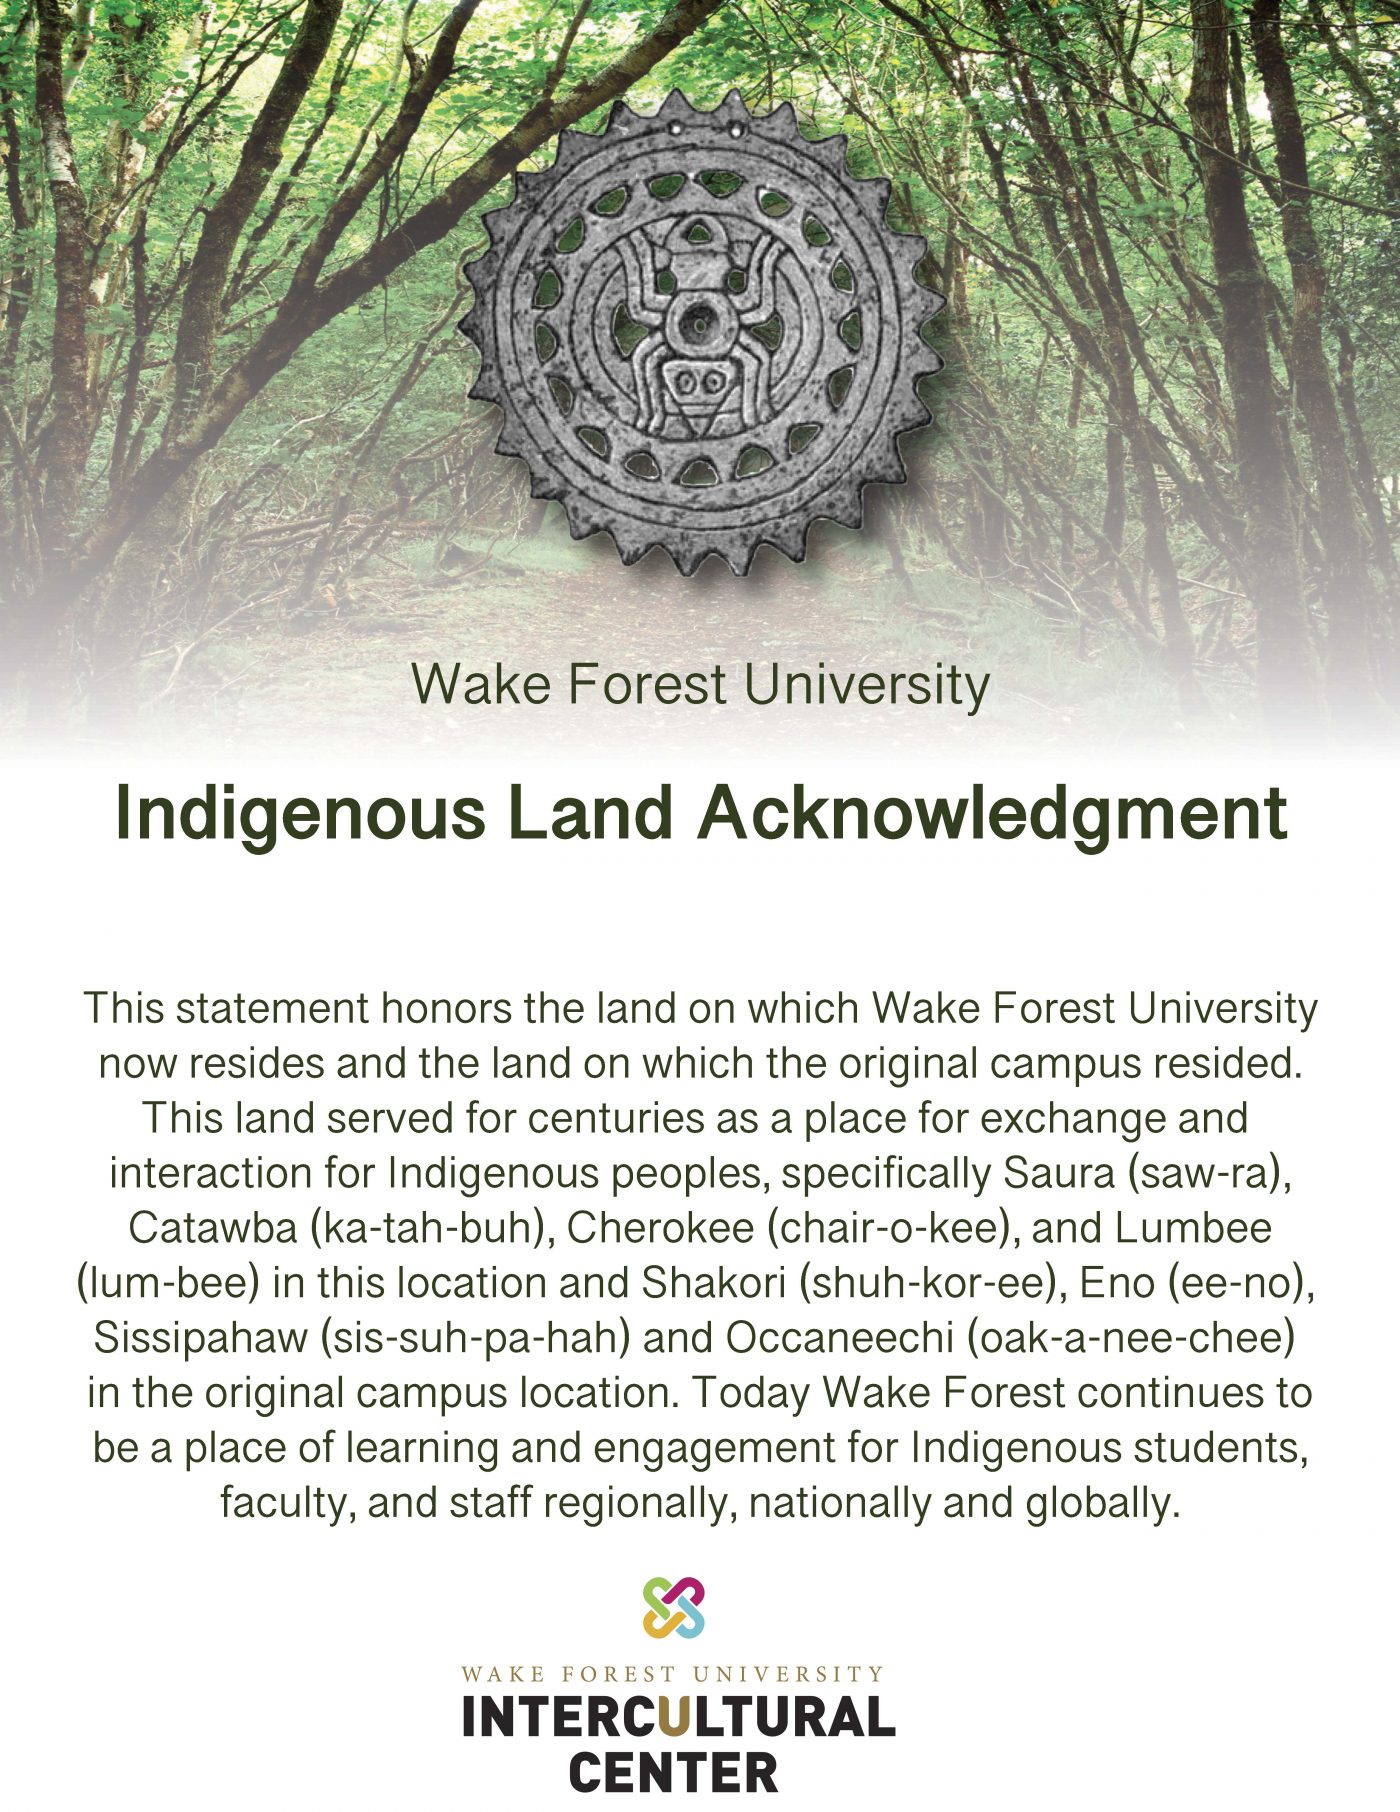 WFU Indigenous Land Acknowledgment Intercultural Center